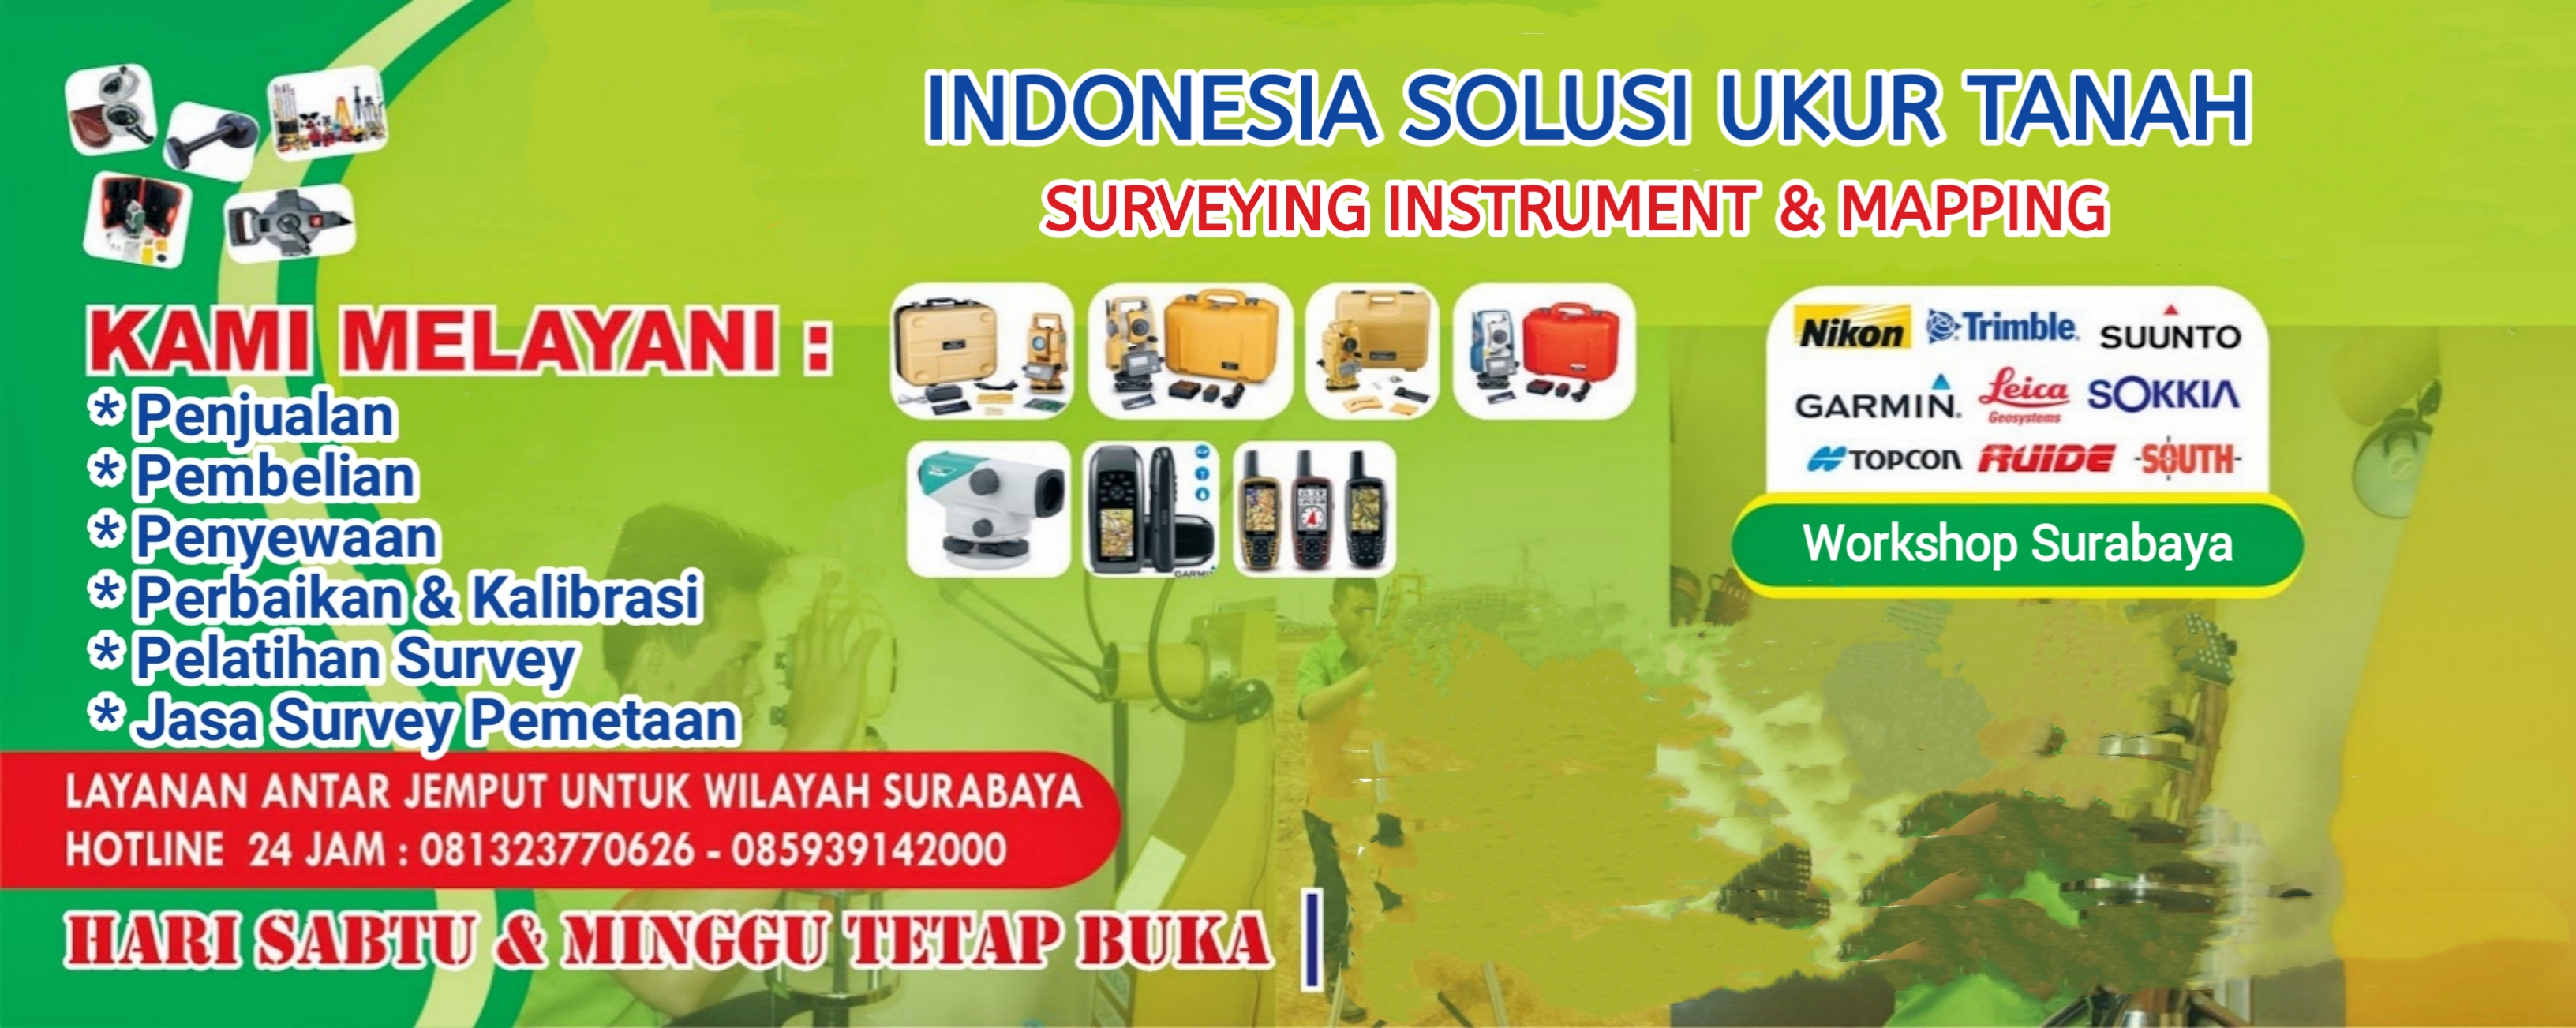 Indosurta Surabaya adalah perusahaan cabang Indosurta Group yang bergerak di bidang penjualan, sewa, servis, dan kalibrasi alat ukur khususnya alat survey dan pemetaan di Surabaya, Jawa Timur.